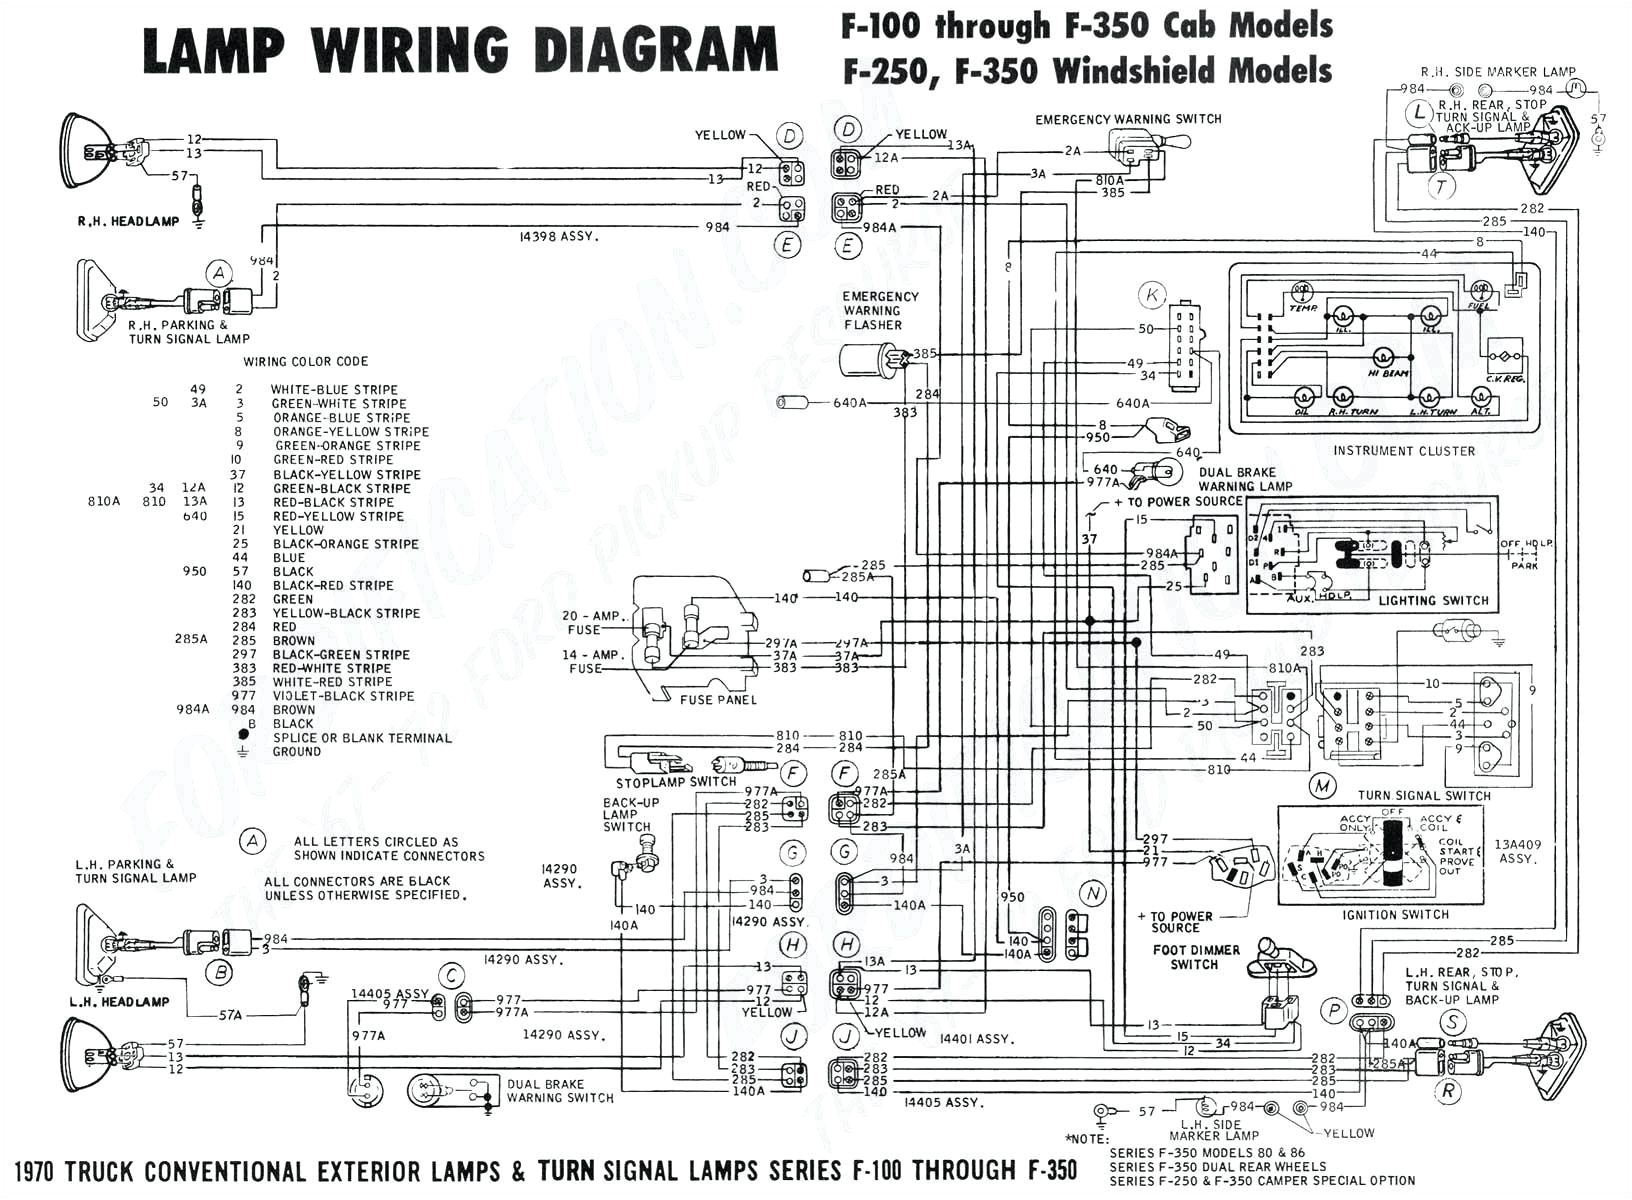 2005 ford Freestyle Radio Wiring Diagram ford Freestyle Radio Wiring Wiring Diagram Article Review